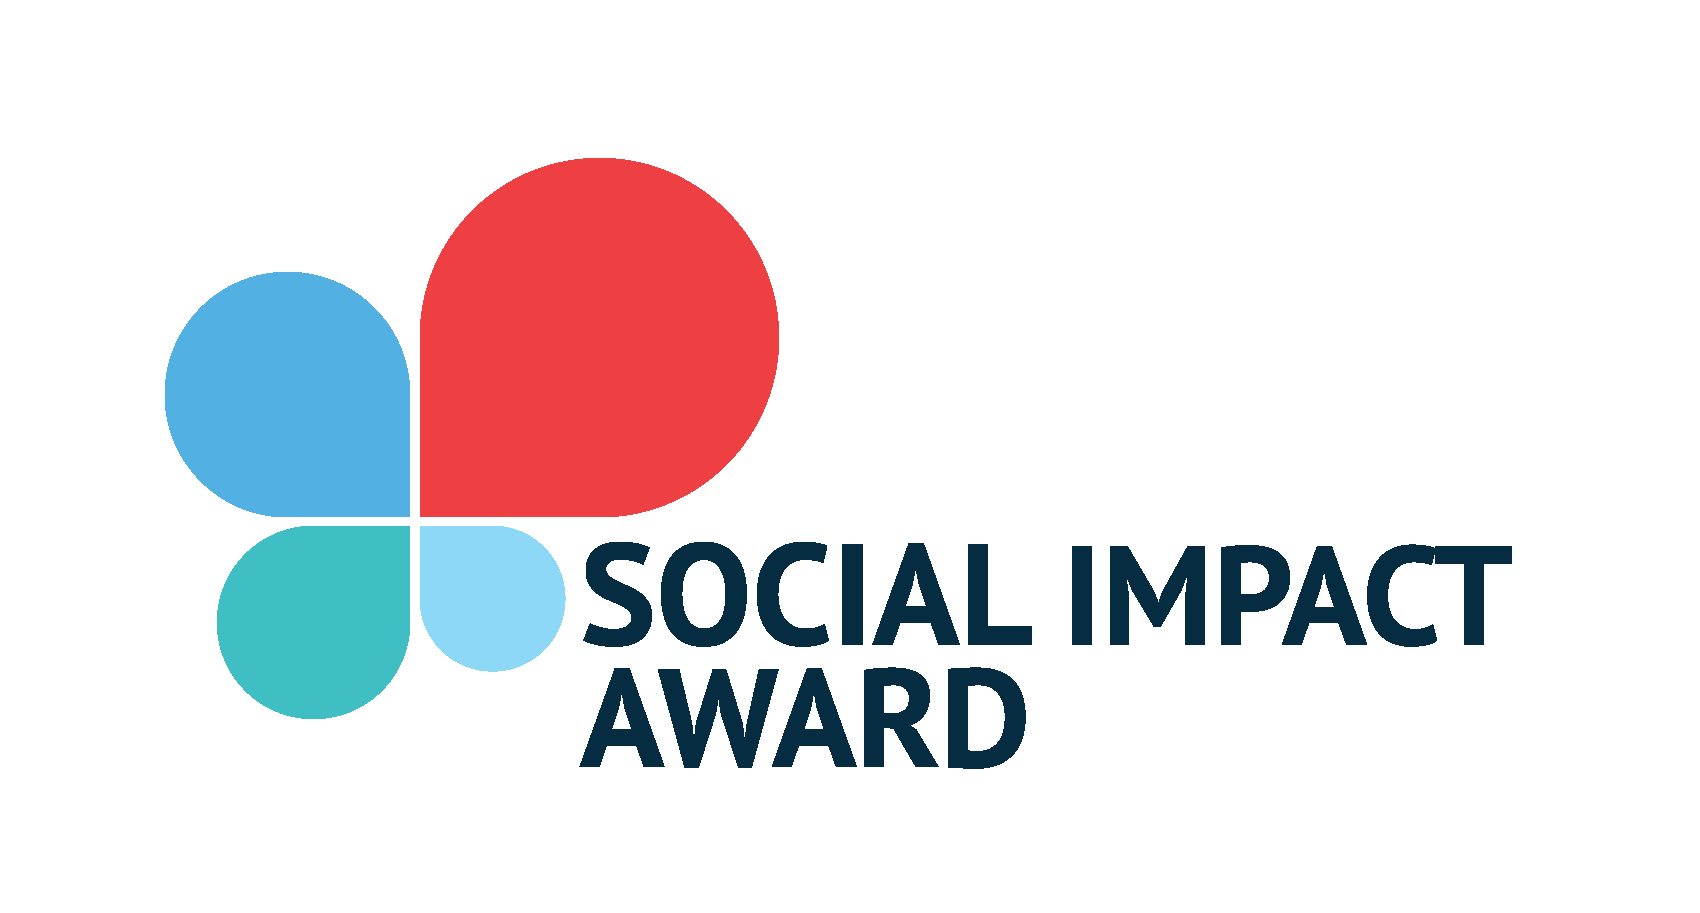 Social Impact Award logotip